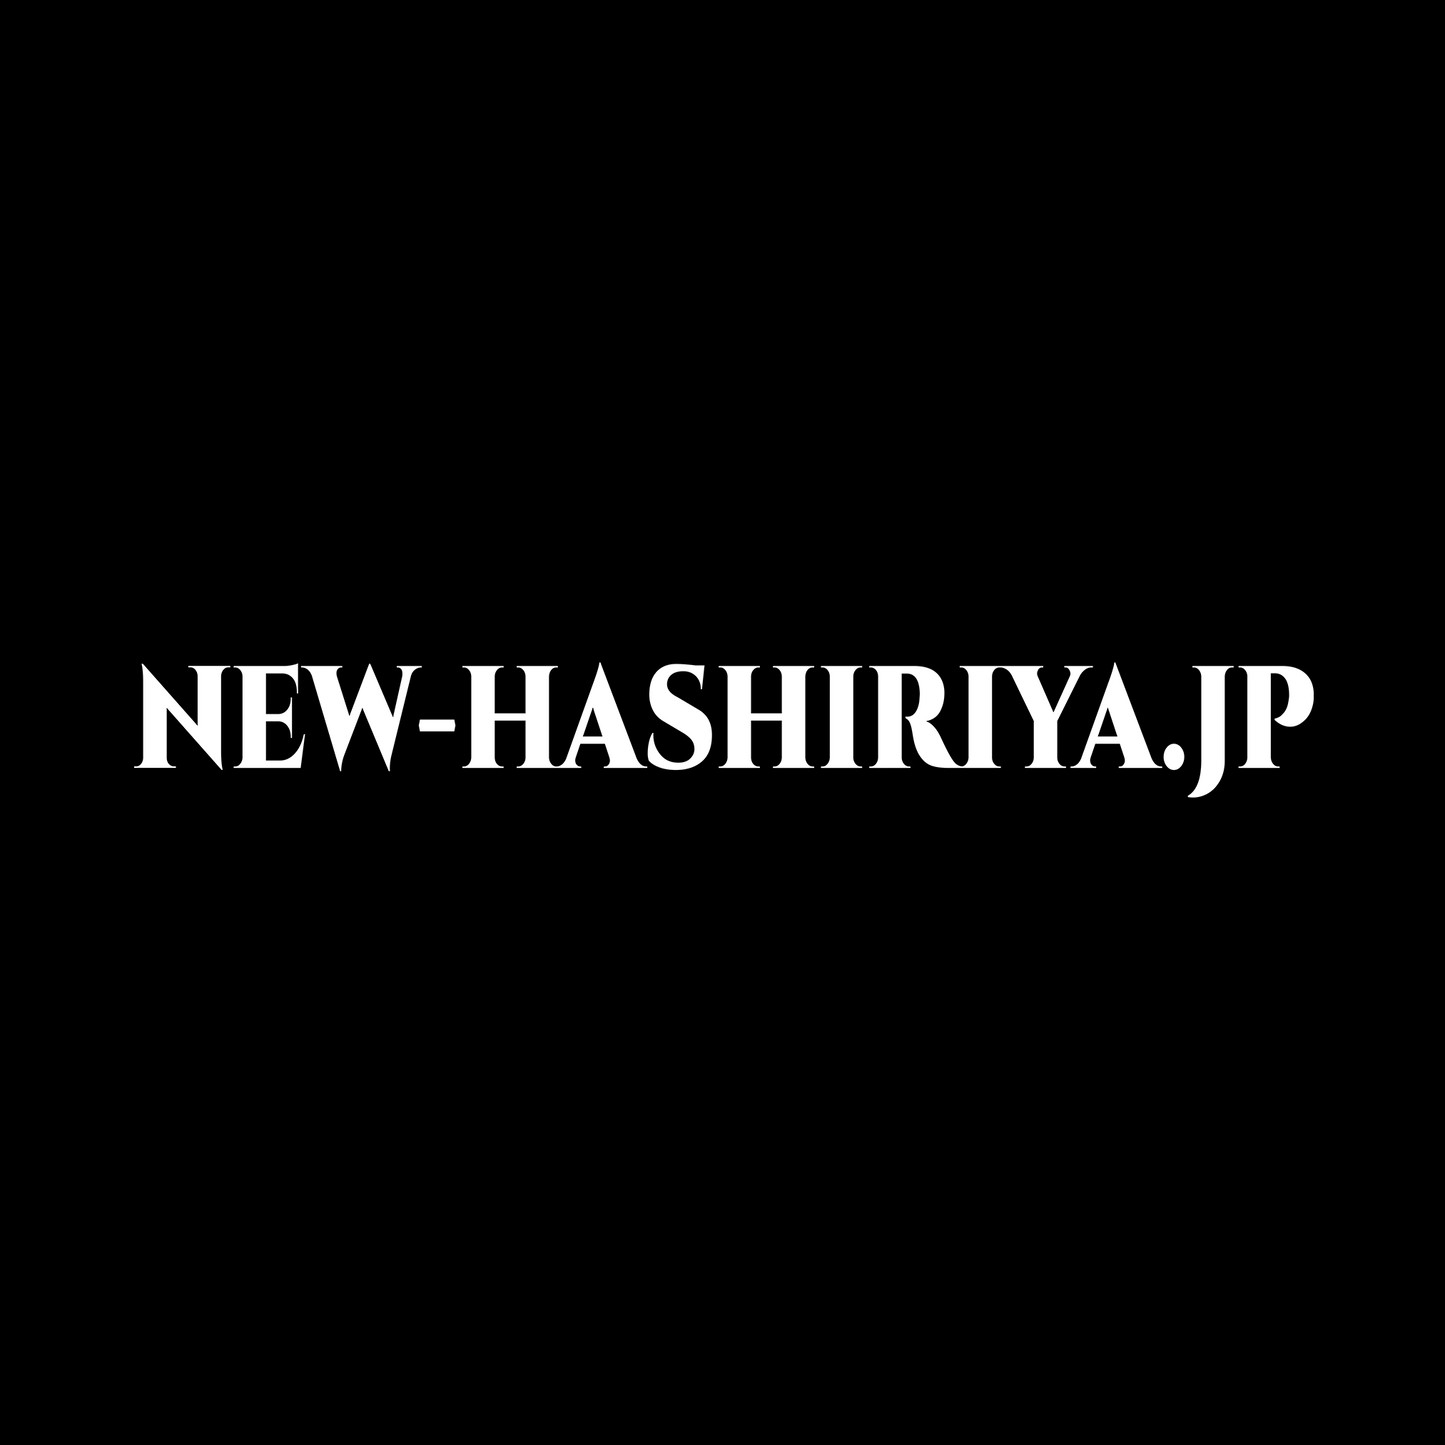 [𝙎𝙊𝙇𝘿 𝙊𝙐𝙏] 'NEW-HASHIRIYA' Bold Reflective White Sticker